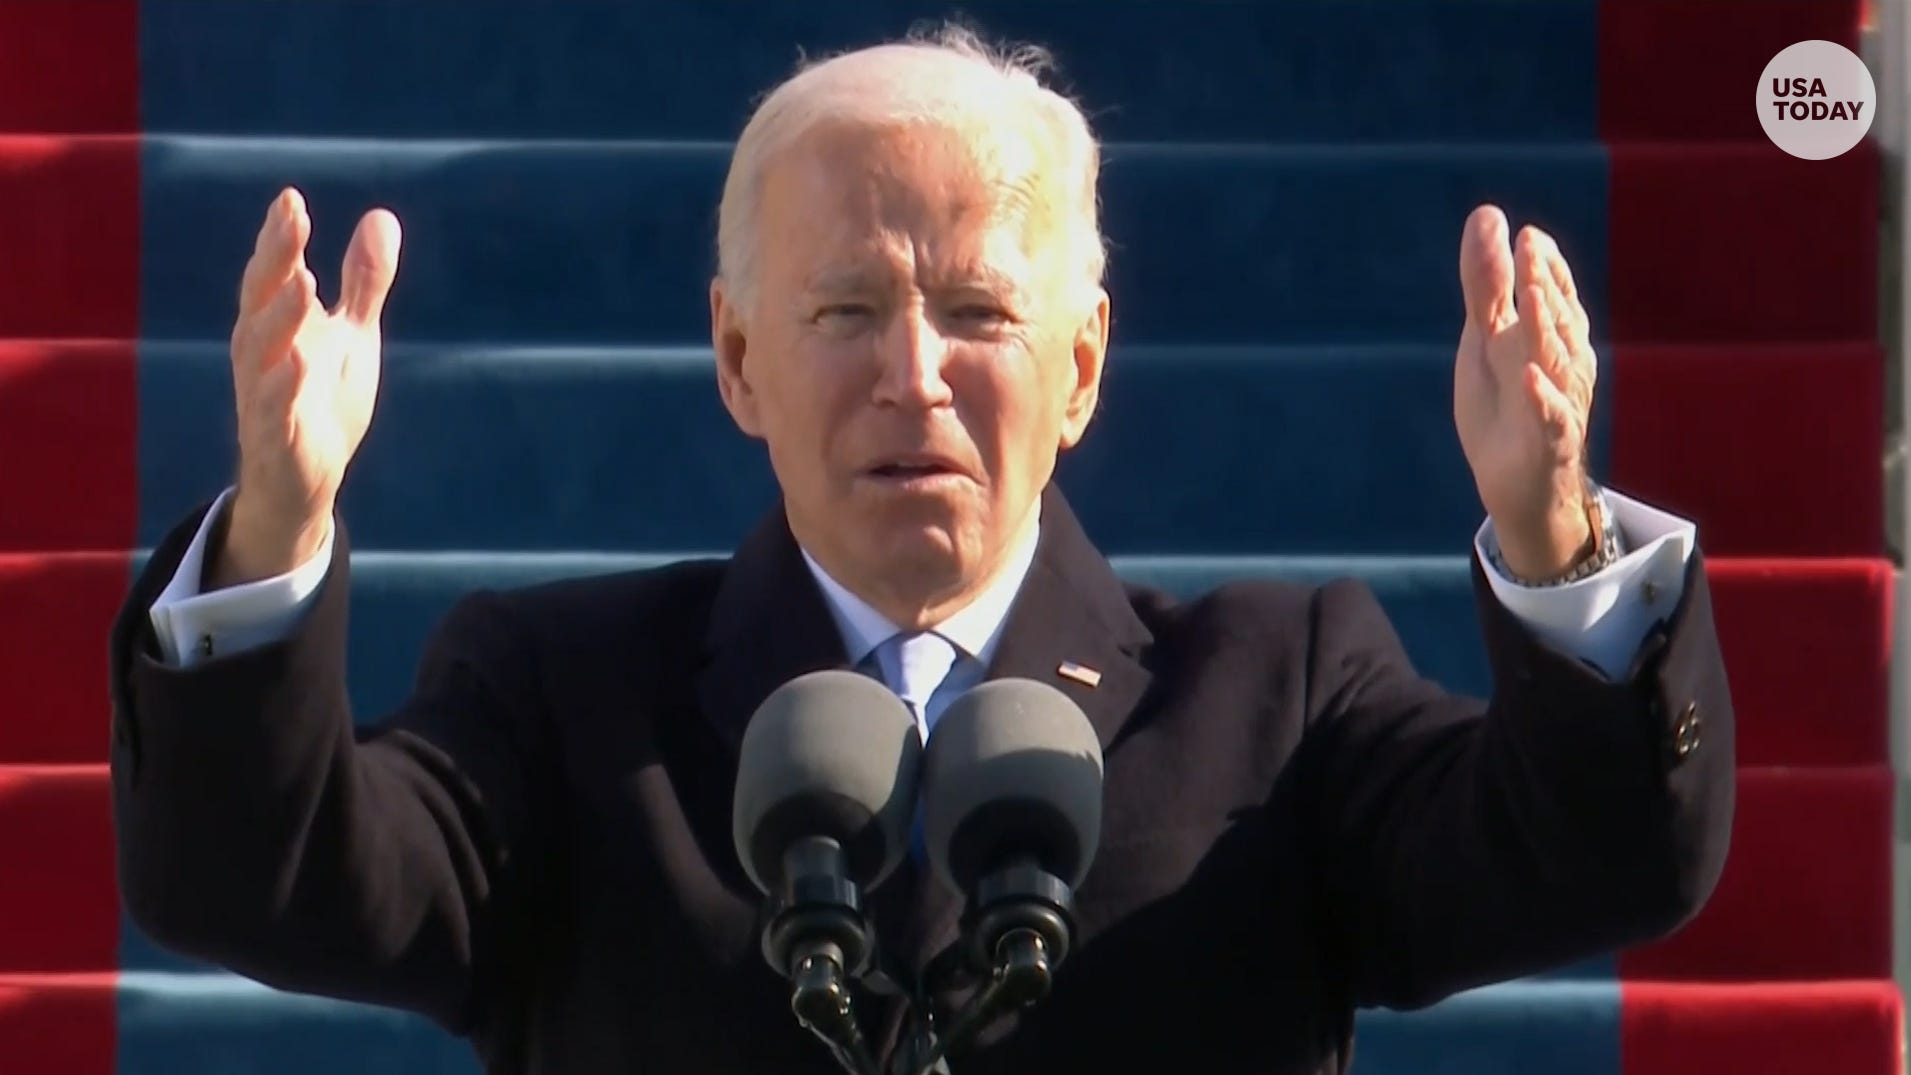 Biden inaugural address spoke of unity in remembering US history